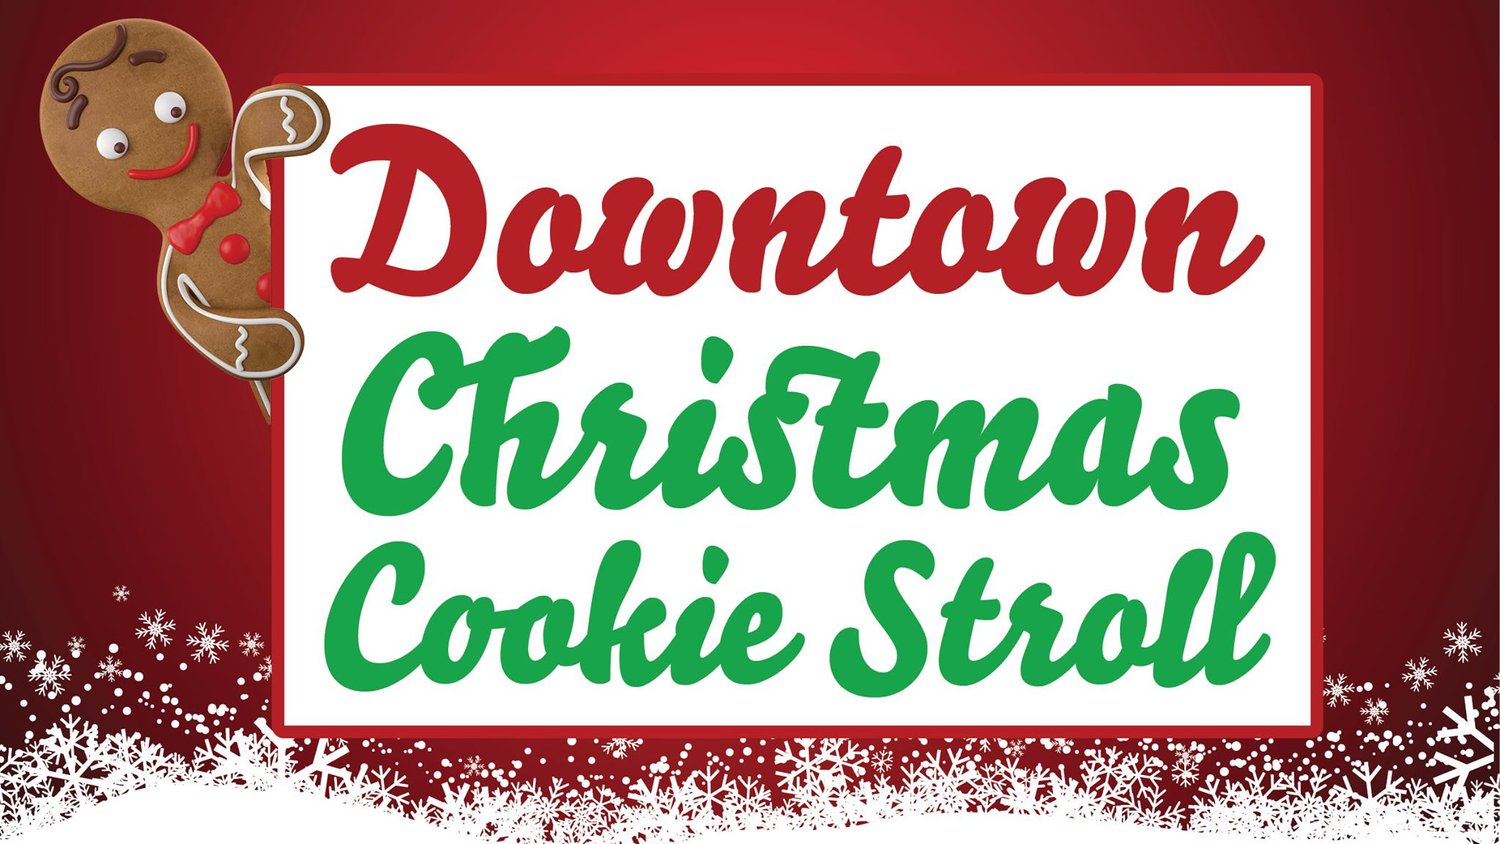 Downtown Belleville Cookie Stroll